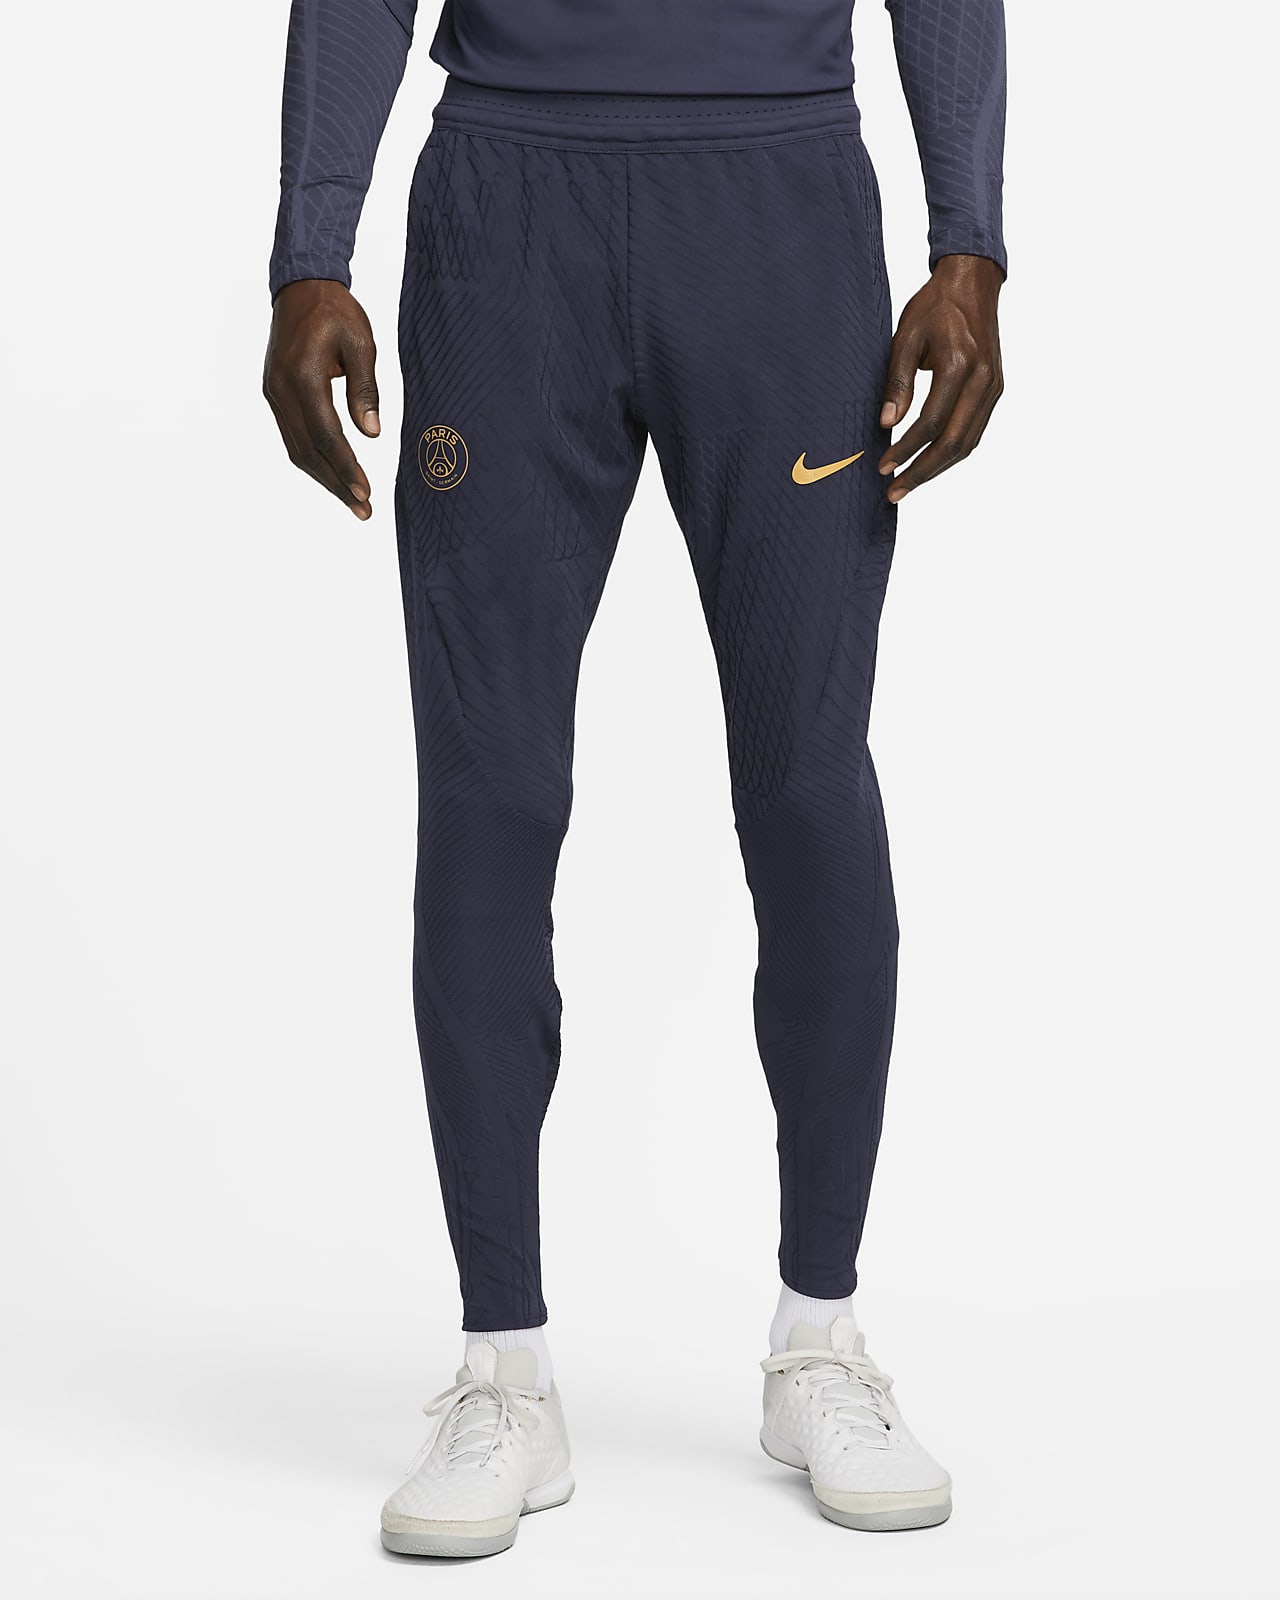 París Saint-Germain Elite Pantalón fútbol de tejido Knit Dri-FIT ADV - Hombre. Nike ES